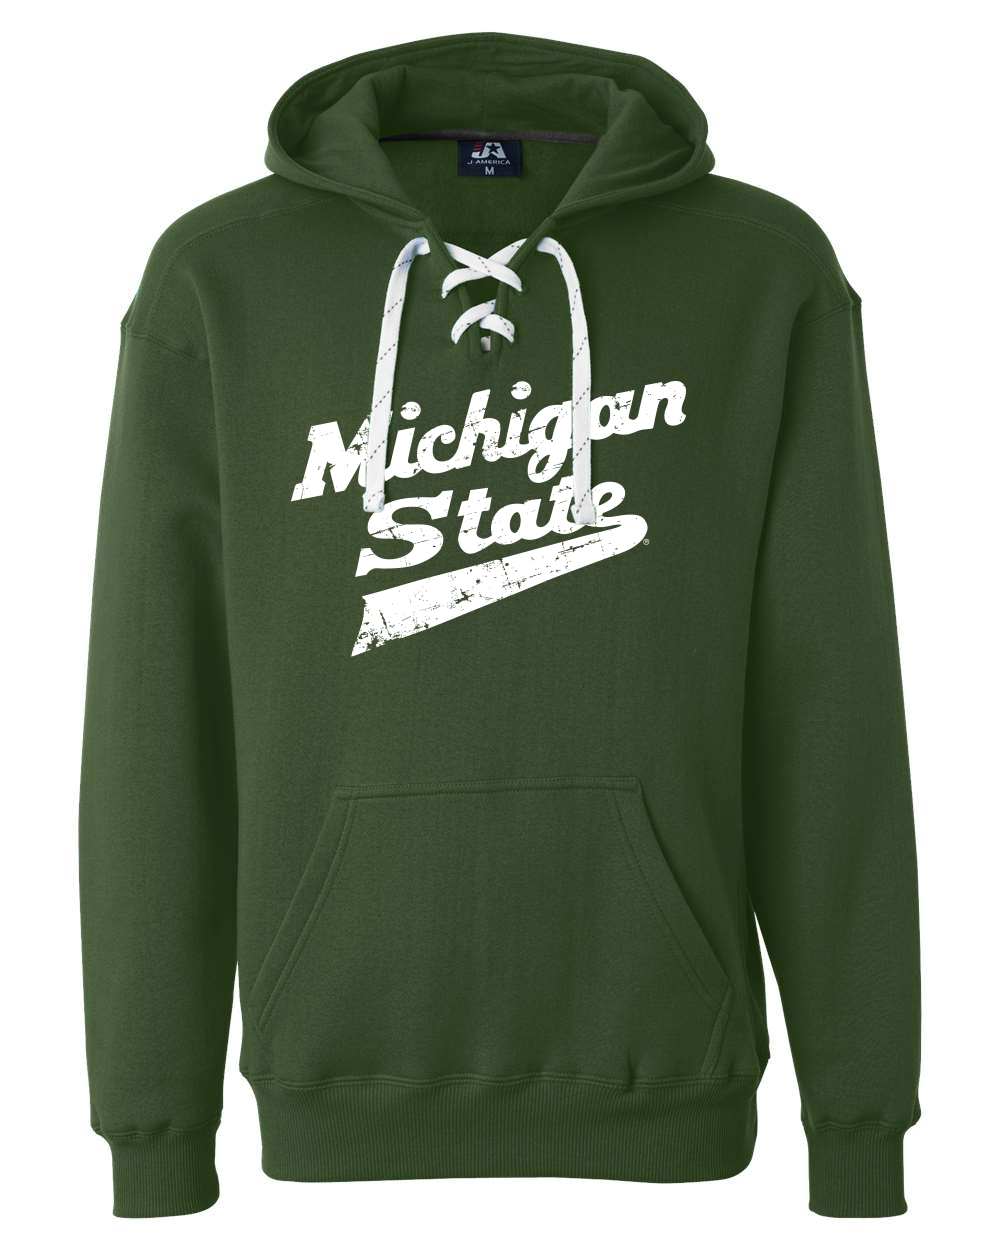 Green Michigan State Sweatshirt with Hockey Logo from Nudge Printing